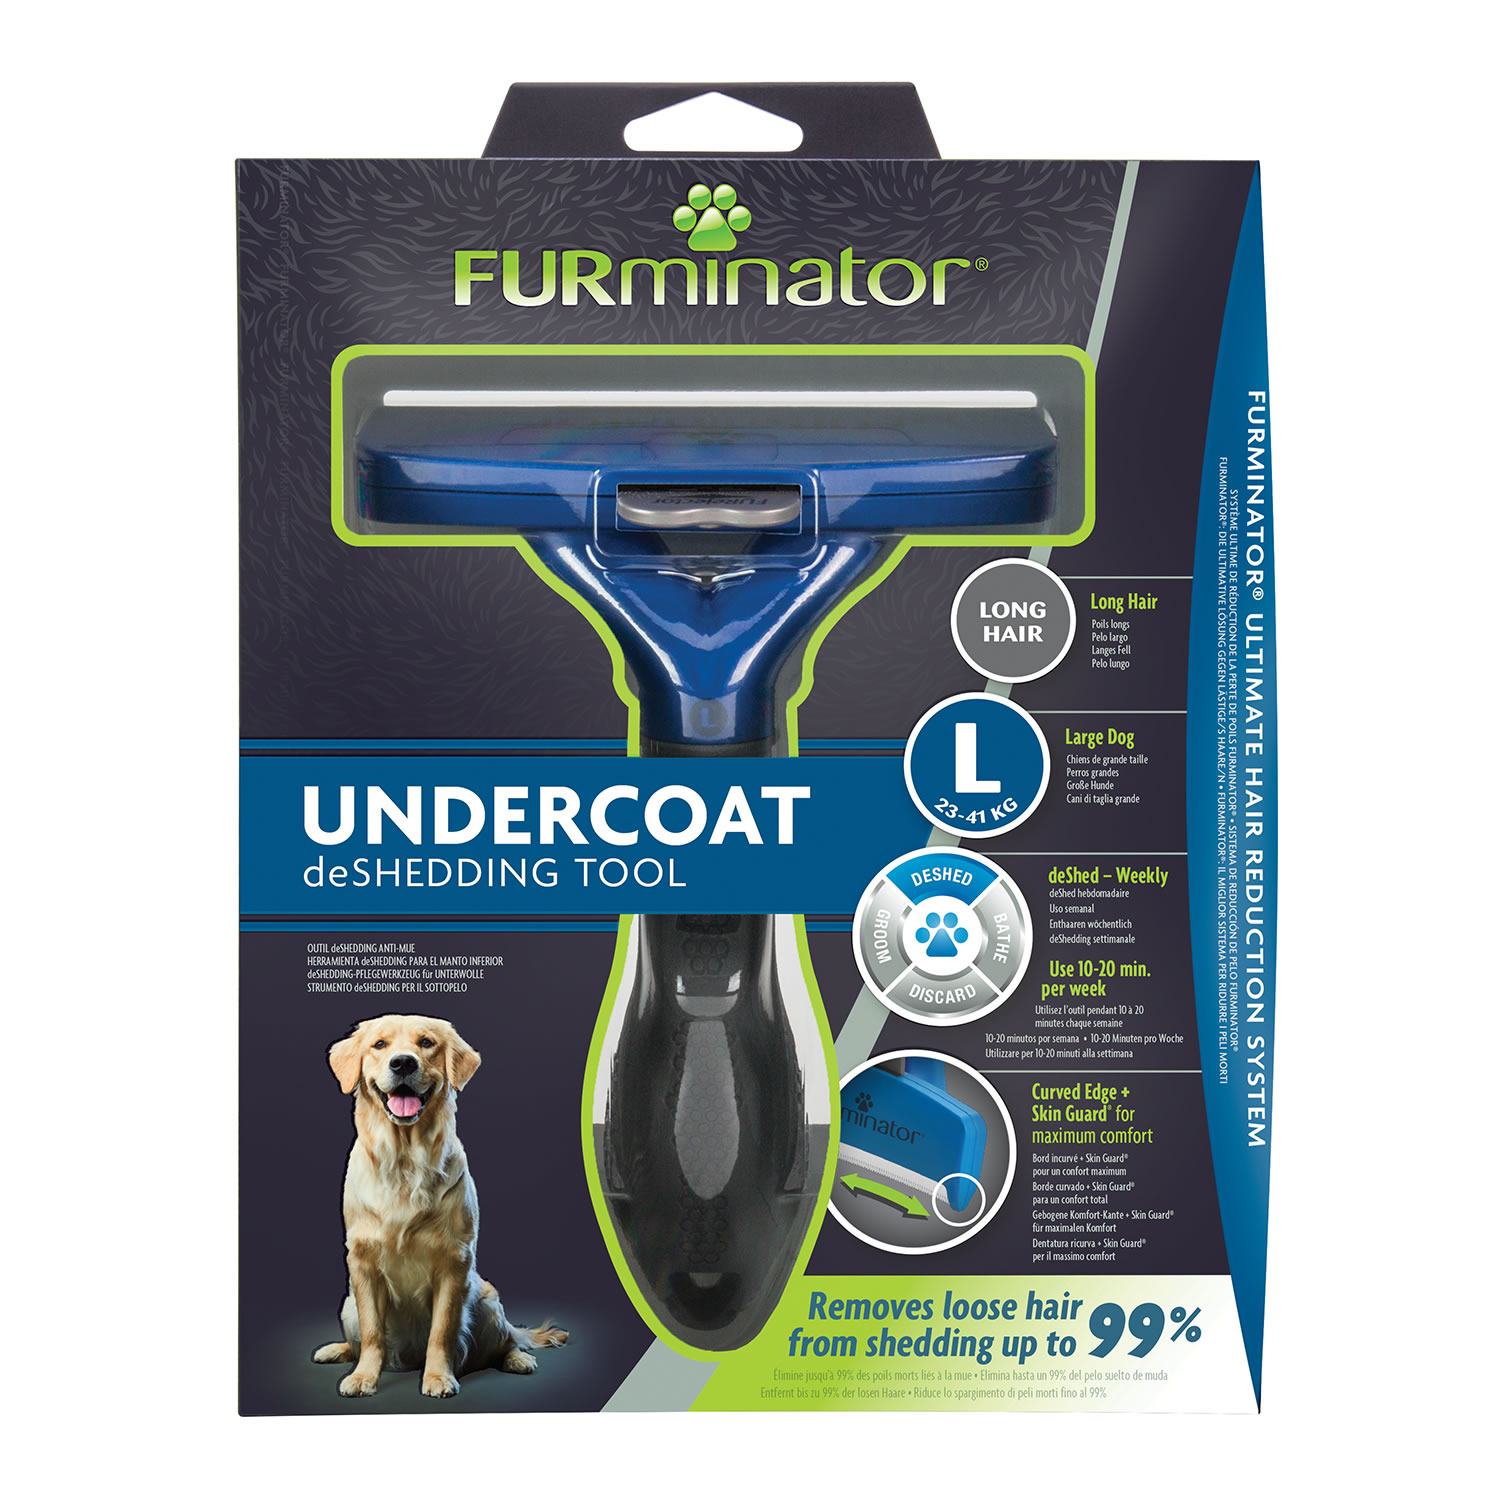 Furminator Undercoat DeShedding Tool for Long Hair Dogs | VioVet.co.uk